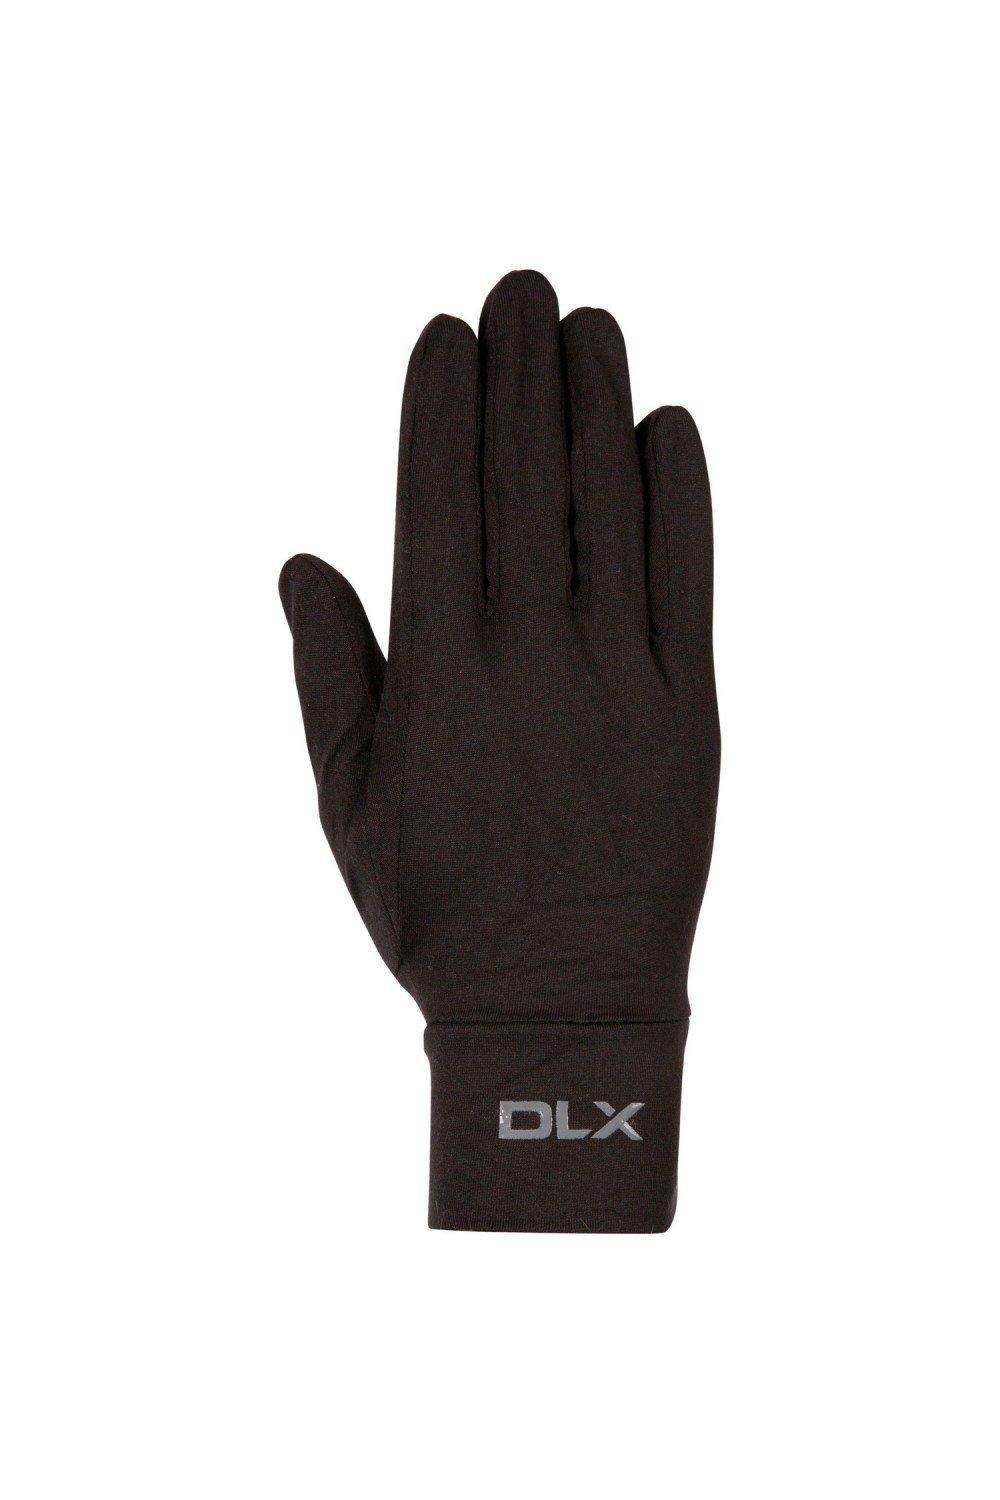 Lindley DLX Ski Gloves